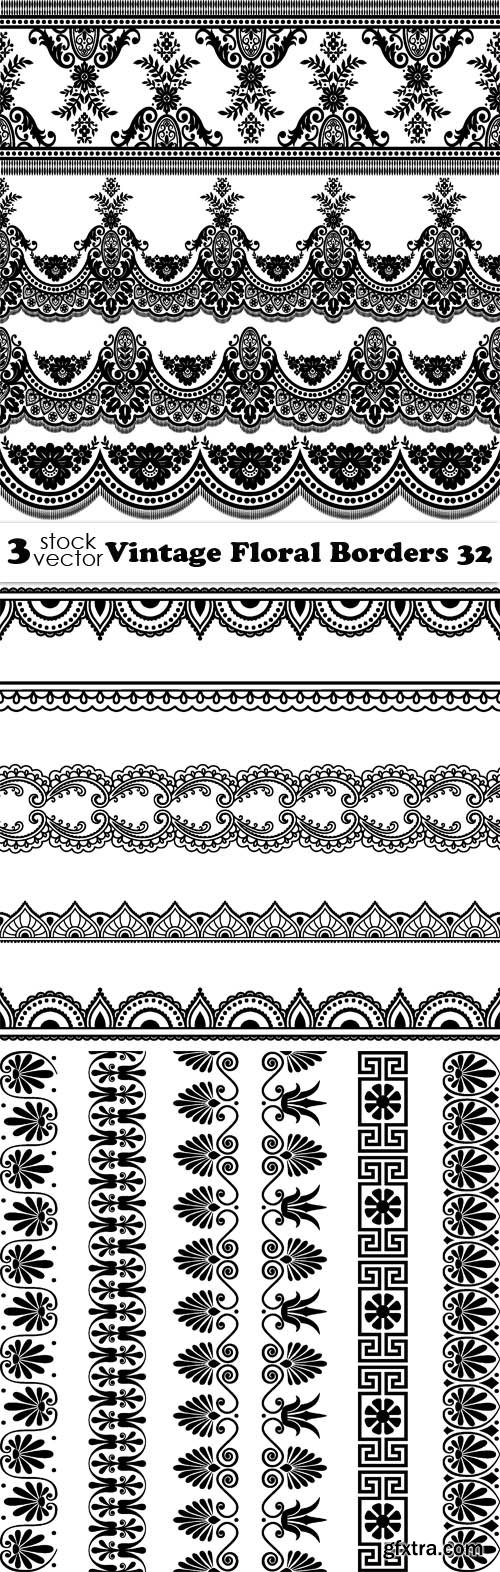 Vectors - Vintage Floral Borders 32